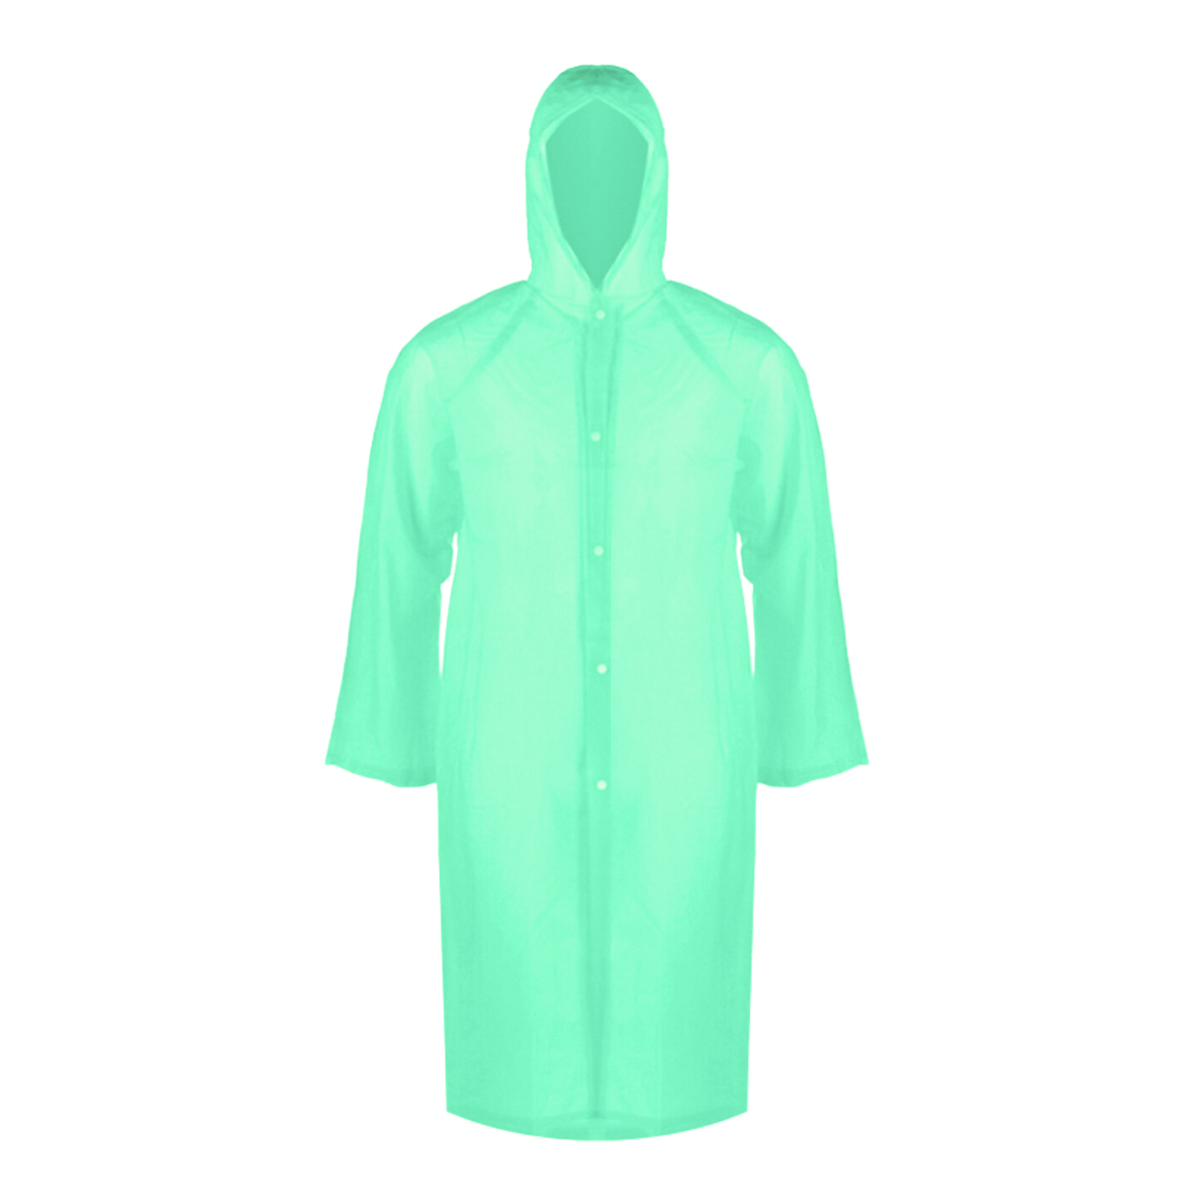 Unisex Adult Eco-Friendly Lightweight PEVA Rain Jacket | Shop Today ...